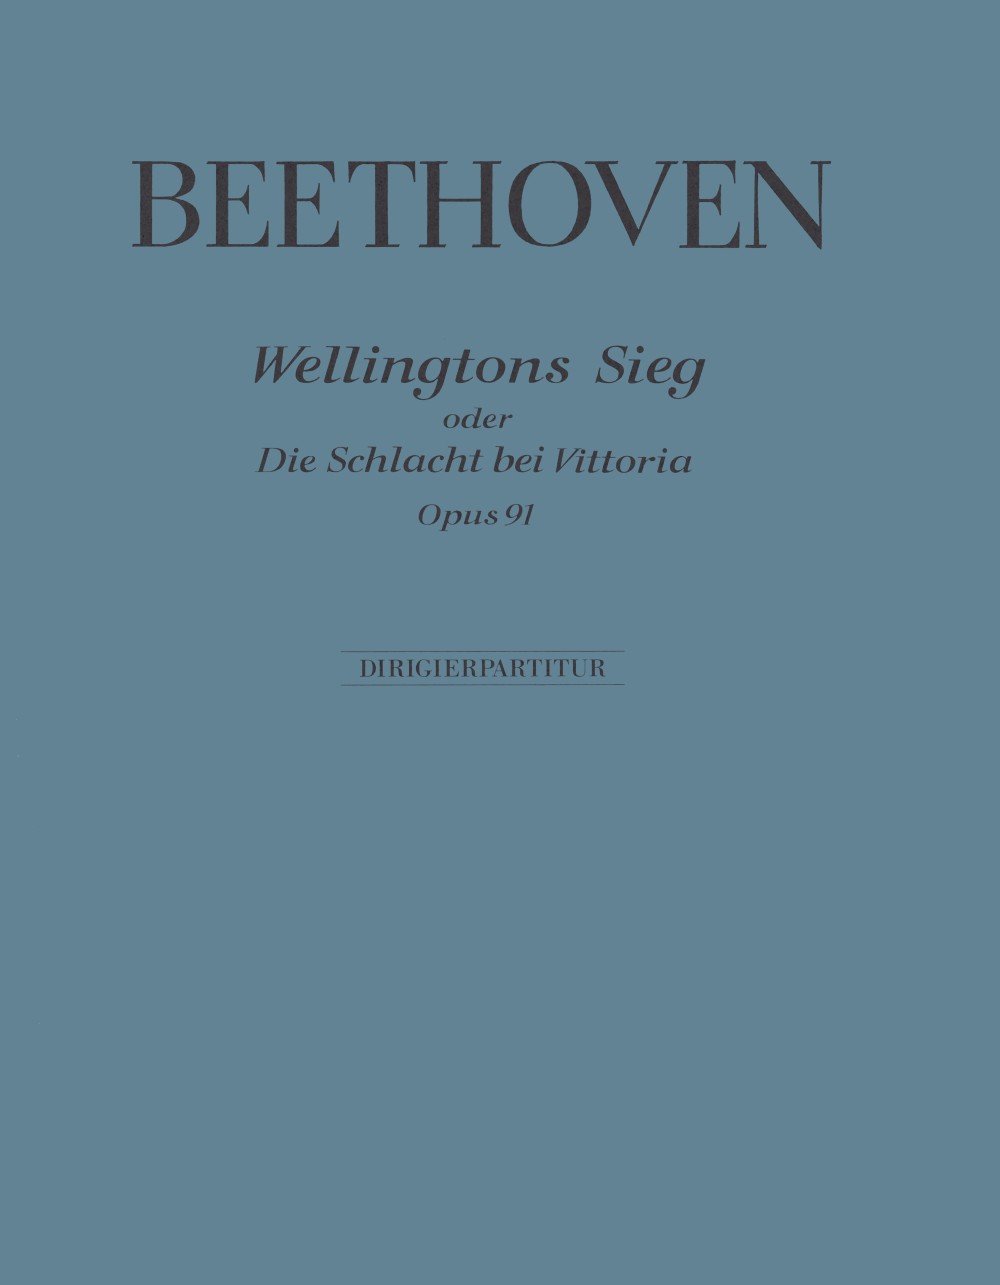 Beethoven: Wellington's Victory, Op. 91